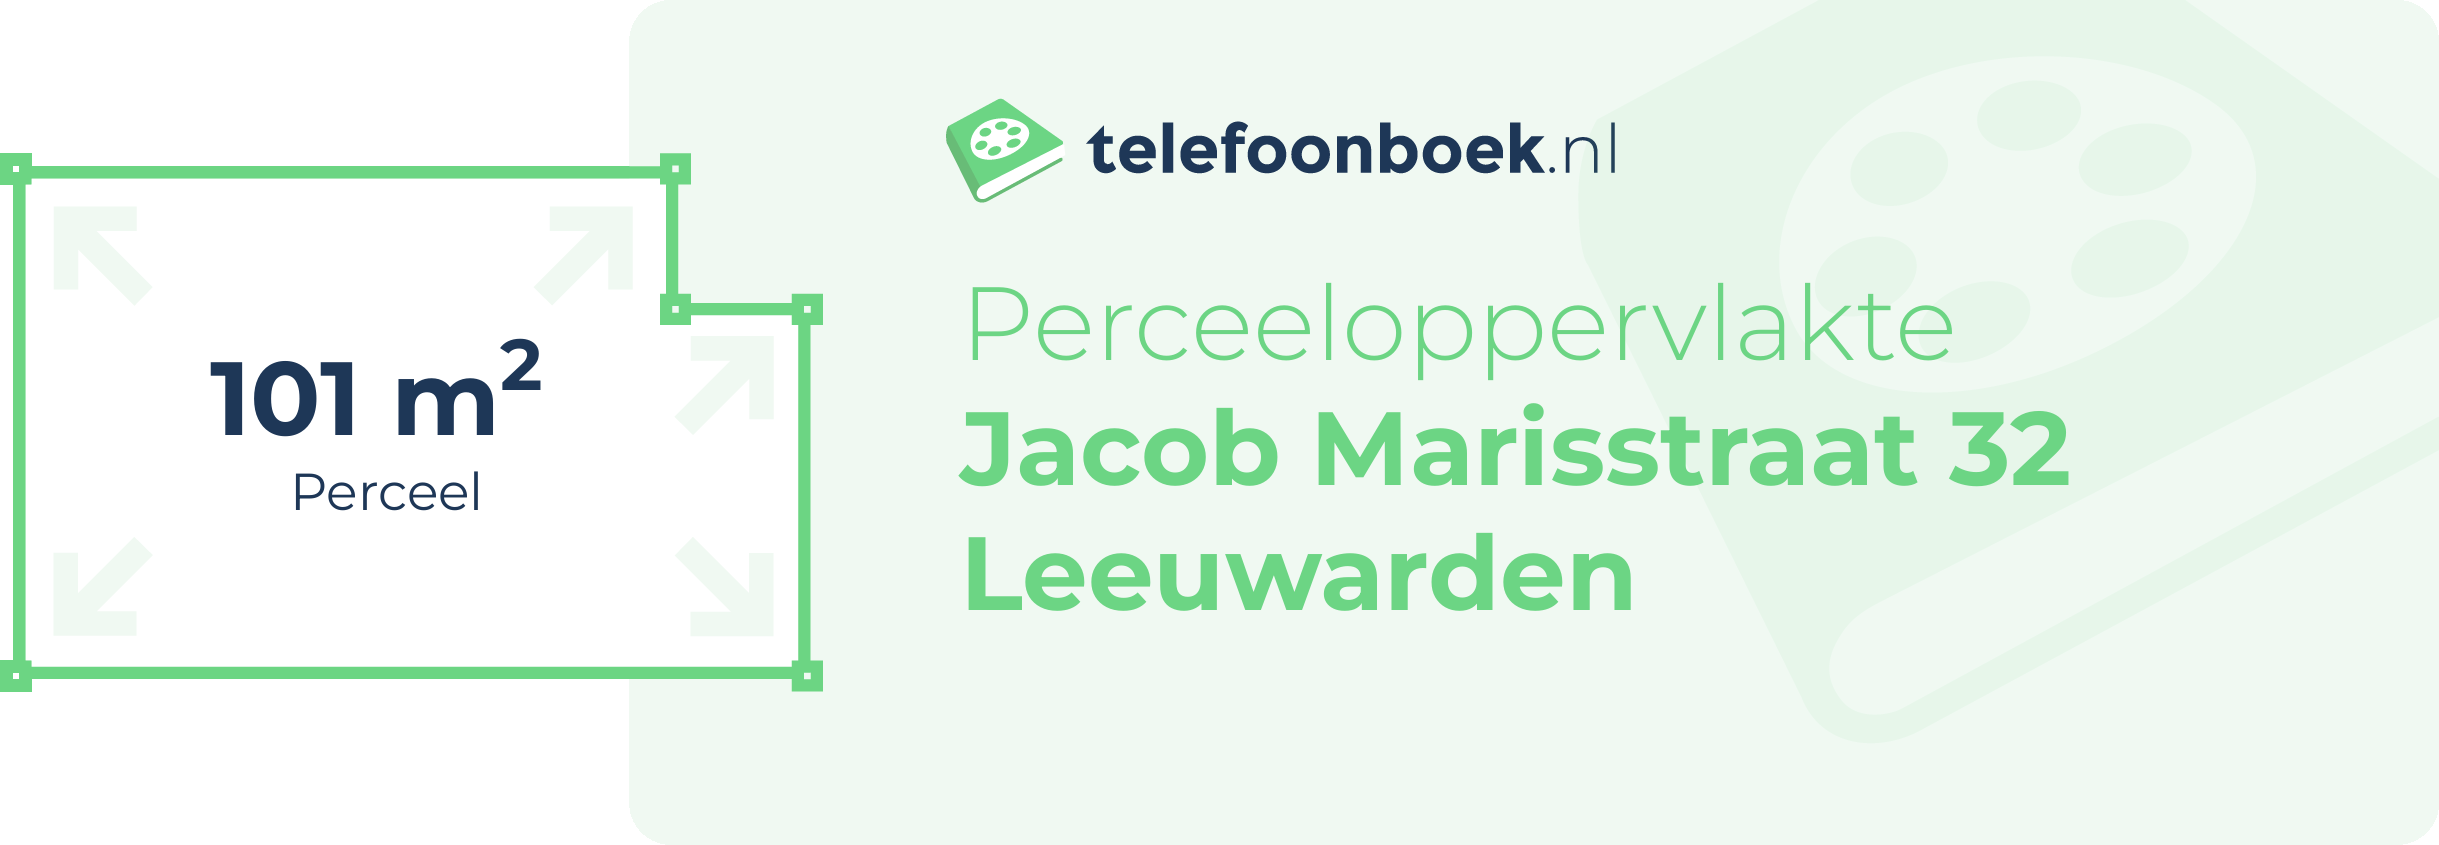 Perceeloppervlakte Jacob Marisstraat 32 Leeuwarden